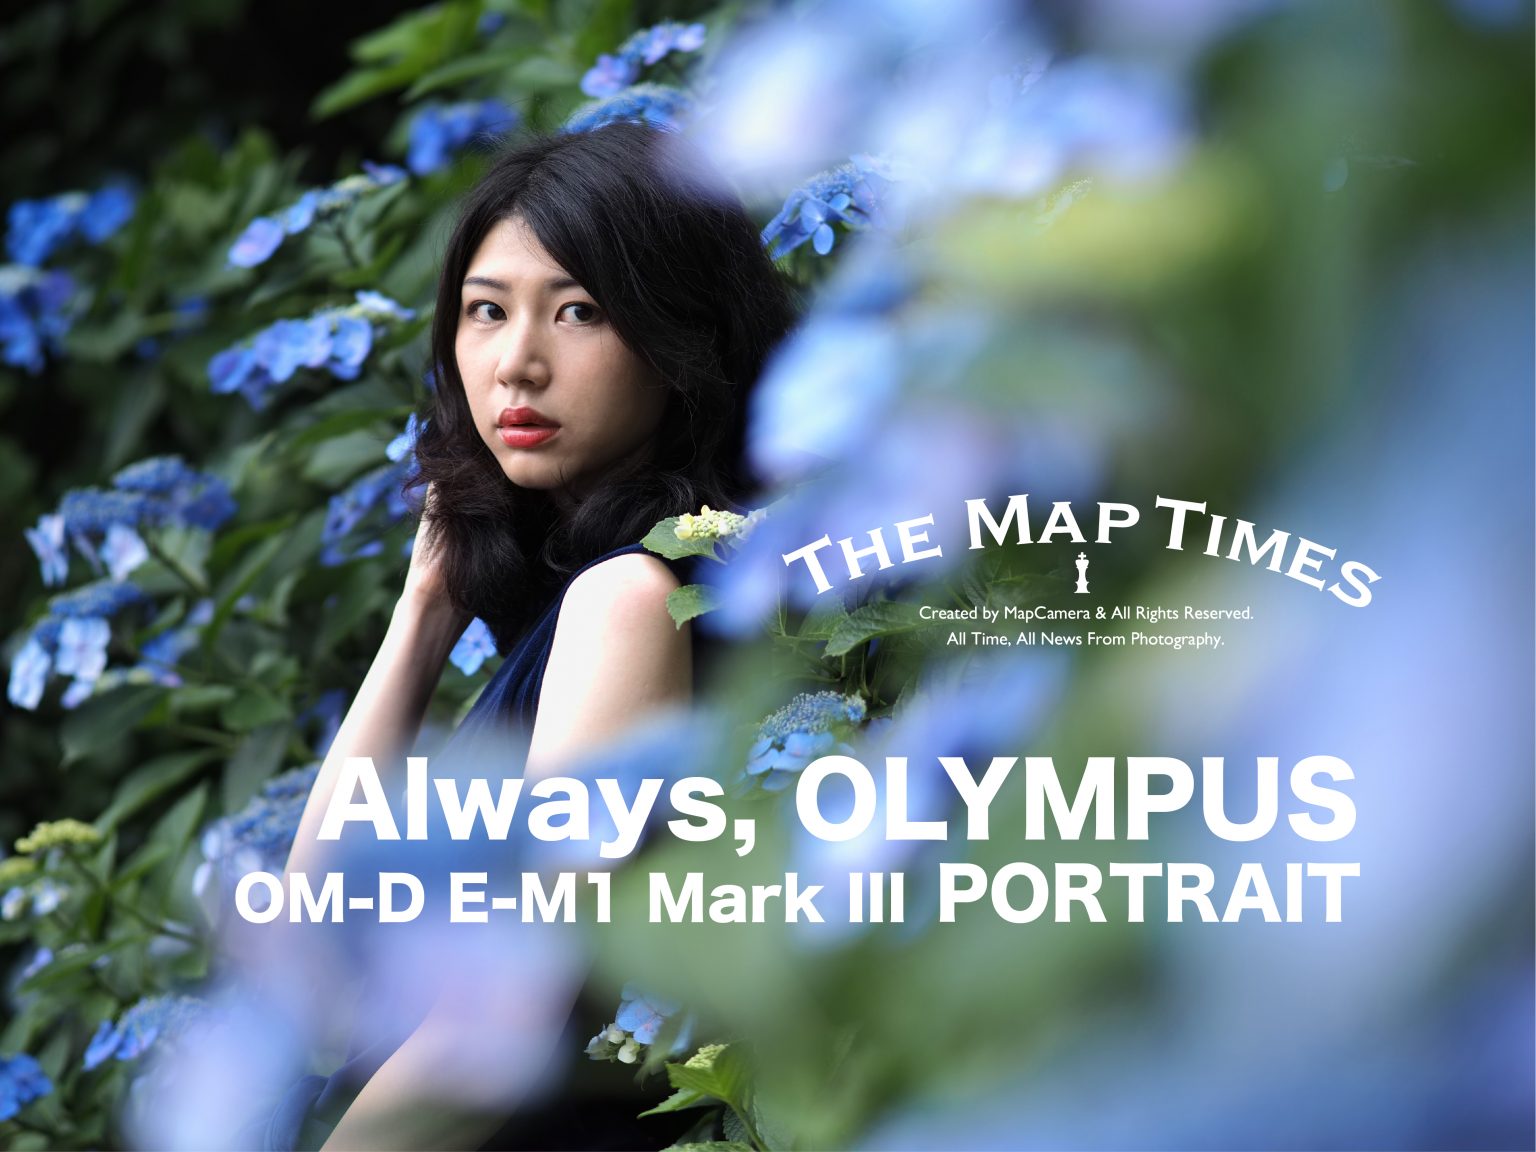 【OLYMPUS】Always, OLYMPUS Ver. OM-D E-M1 Mark III